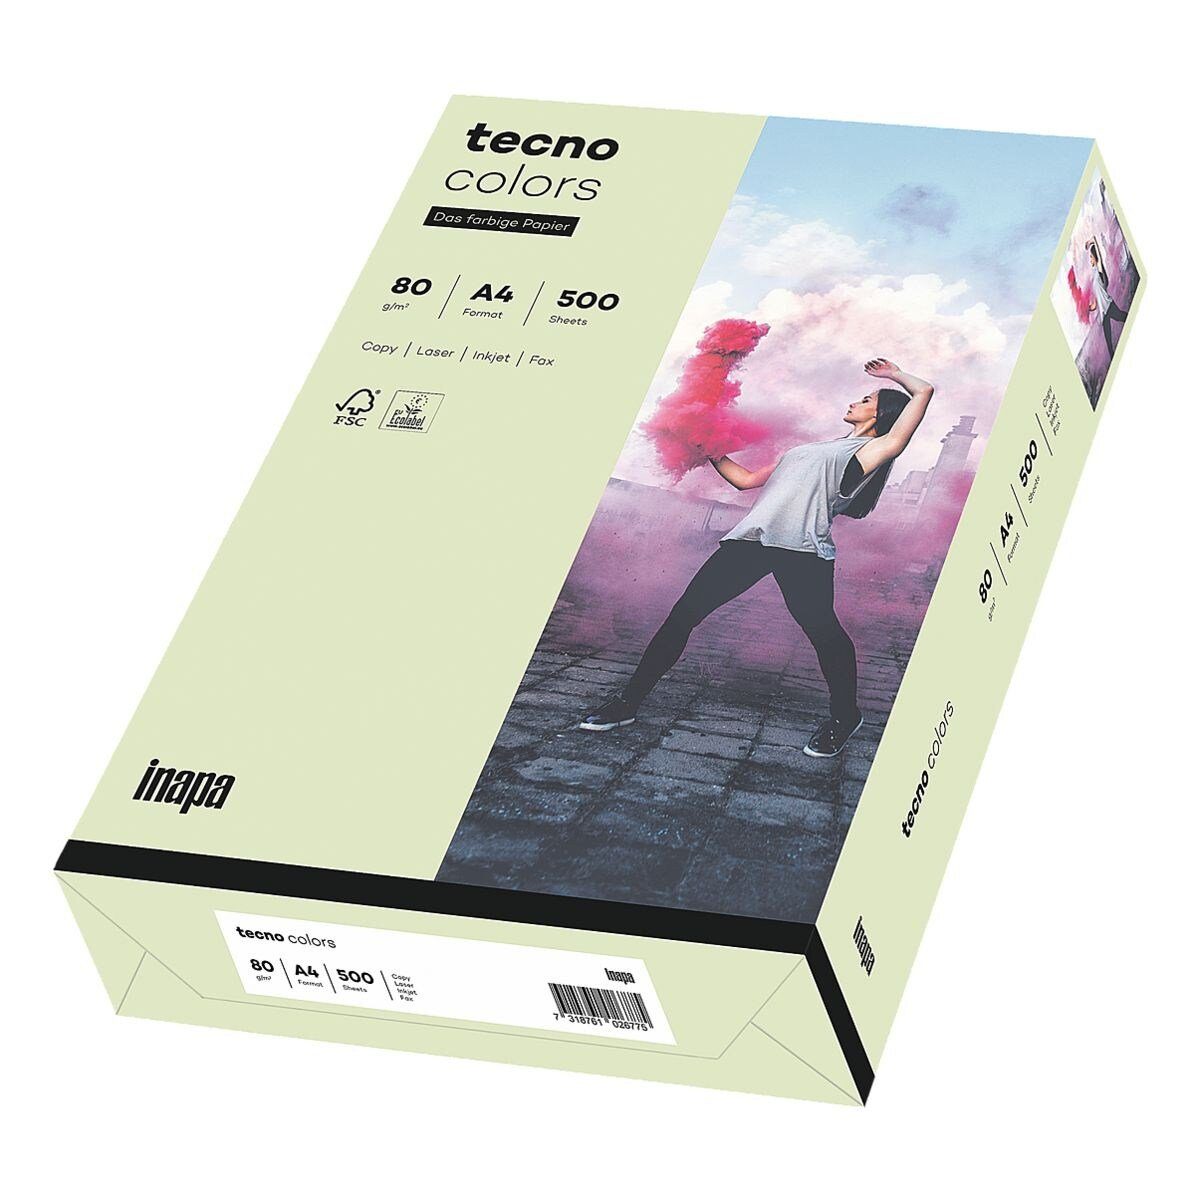 Inapa tecno Drucker- und Kopierpapier Rainbow / tecno Colors, Pastellfarben, Format DIN A4, 80 g/m², 500 Blatt hellgrün